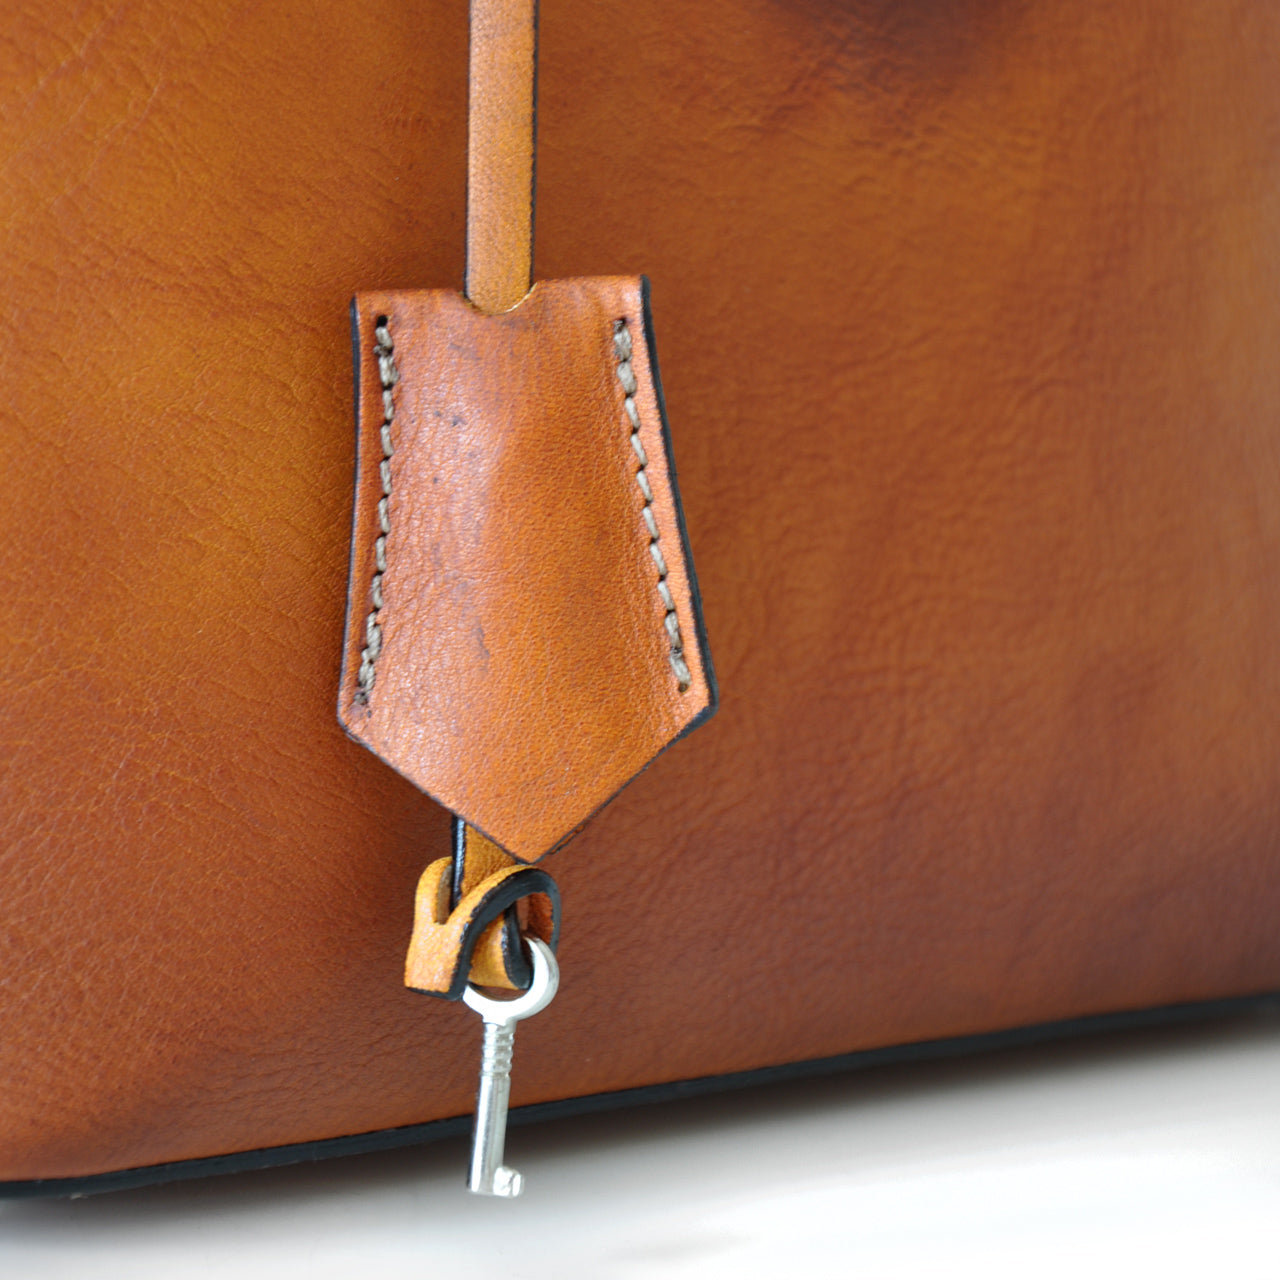 Pratesi Versilia Small Bruce Handbag in genuine Italian leather - Vegetable Tanned Italian Leather Mustard